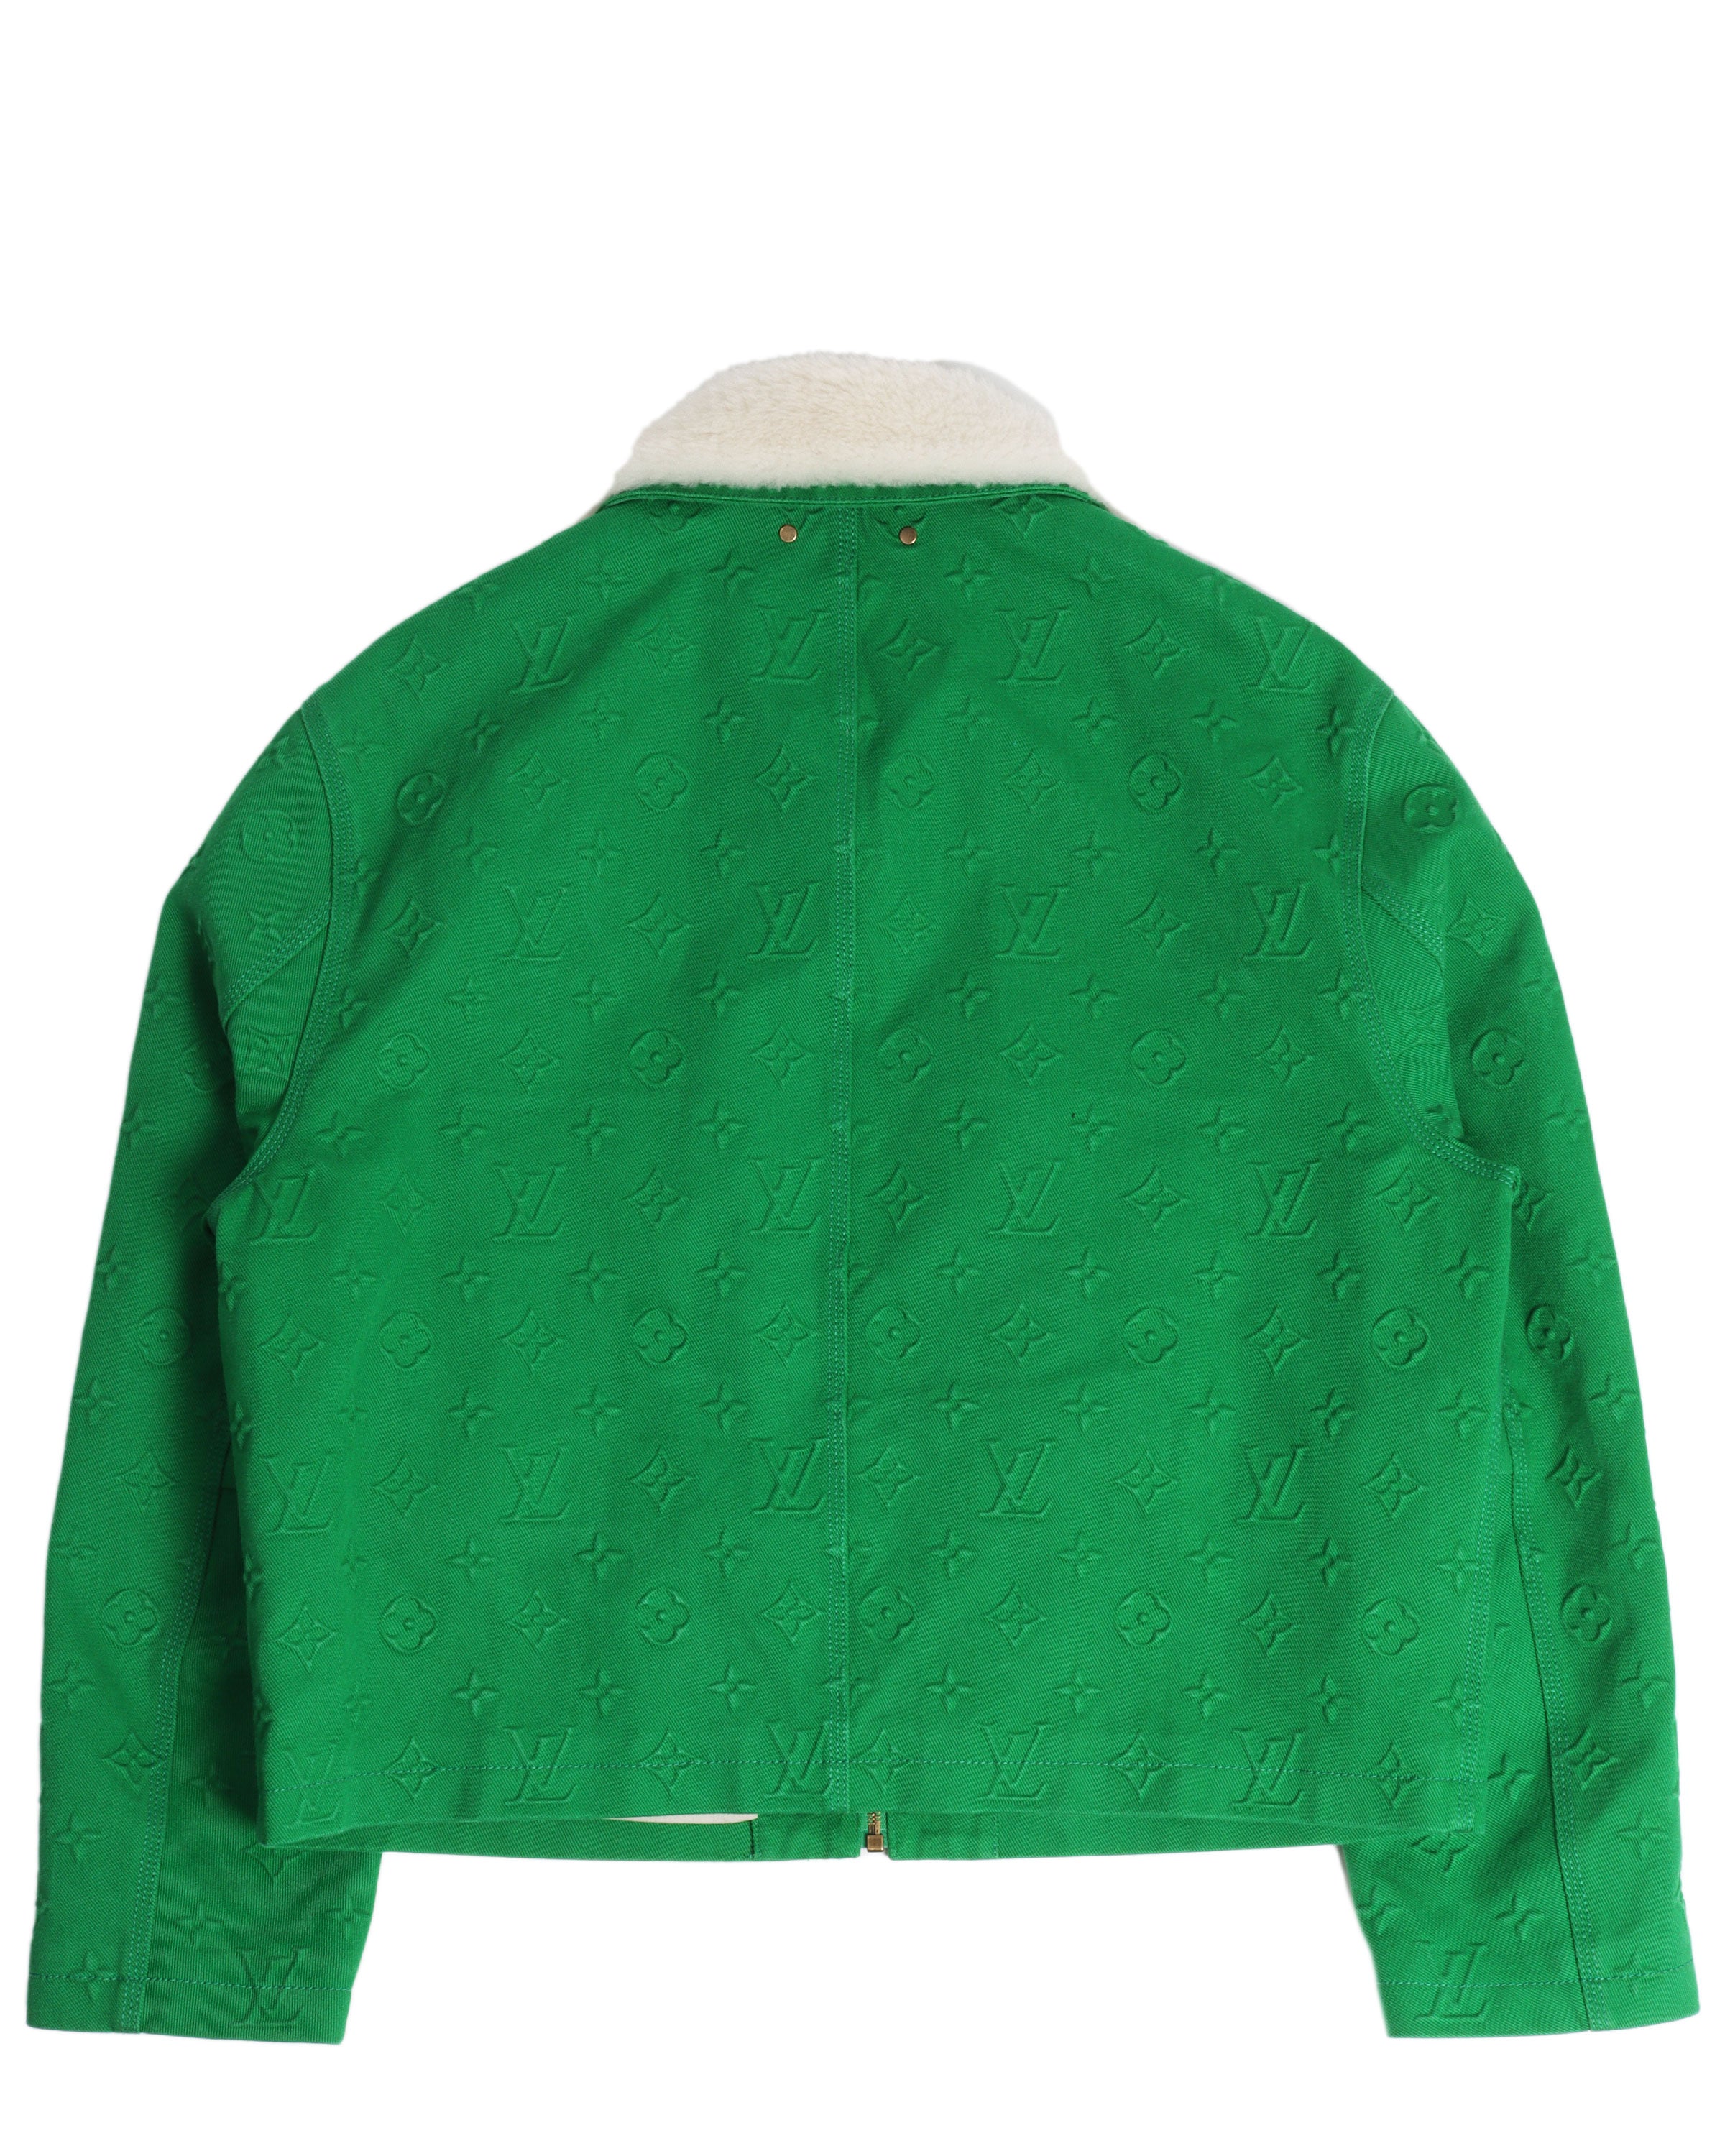 Louis Vuitton Monogram Jacket - 21 For Sale on 1stDibs  lv monogram jacket,  louis vuitton monogram jacket price, louis vuitton green monogram jacket